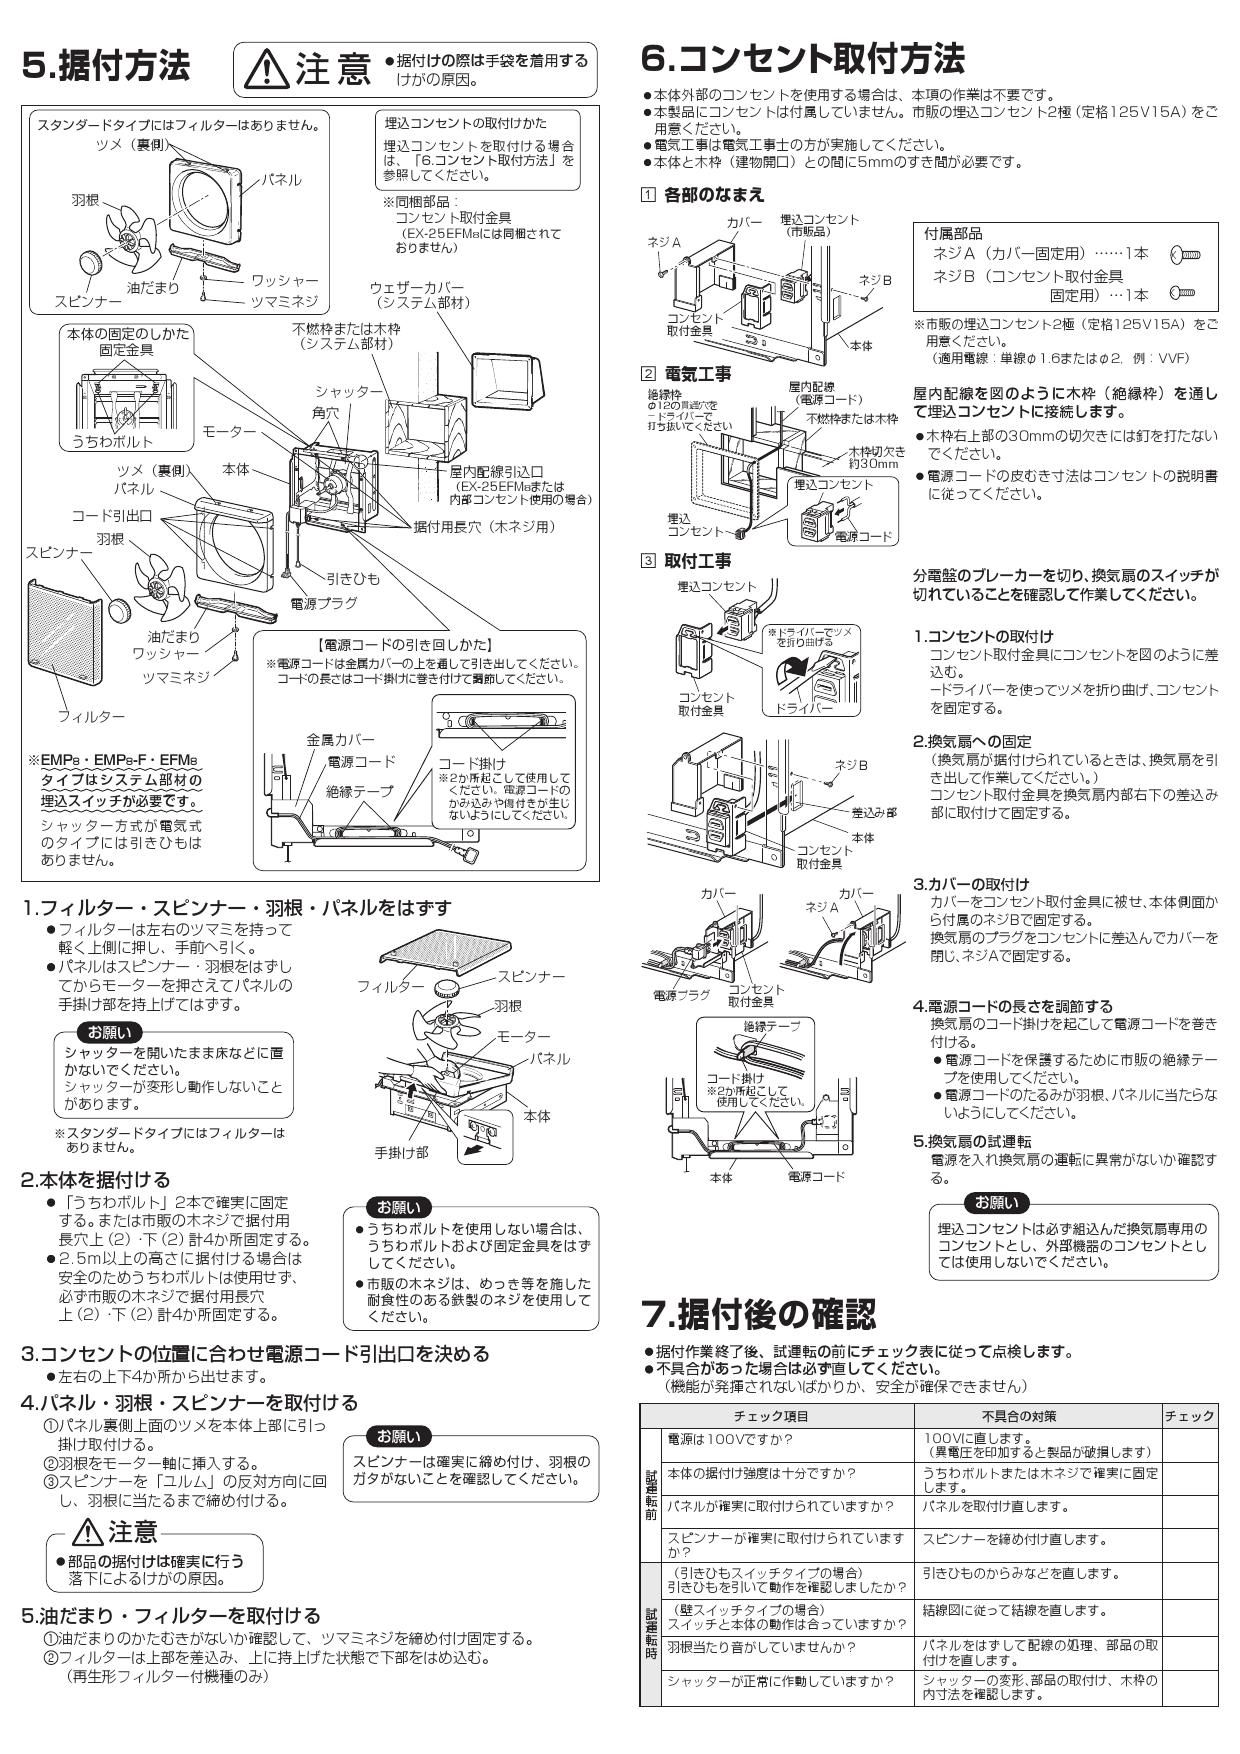 84%OFF!】 三菱電機 EX-25EMP9-F レンジフードファン メタルコンパック ワンタッチフィルタータイプ 換気扇 